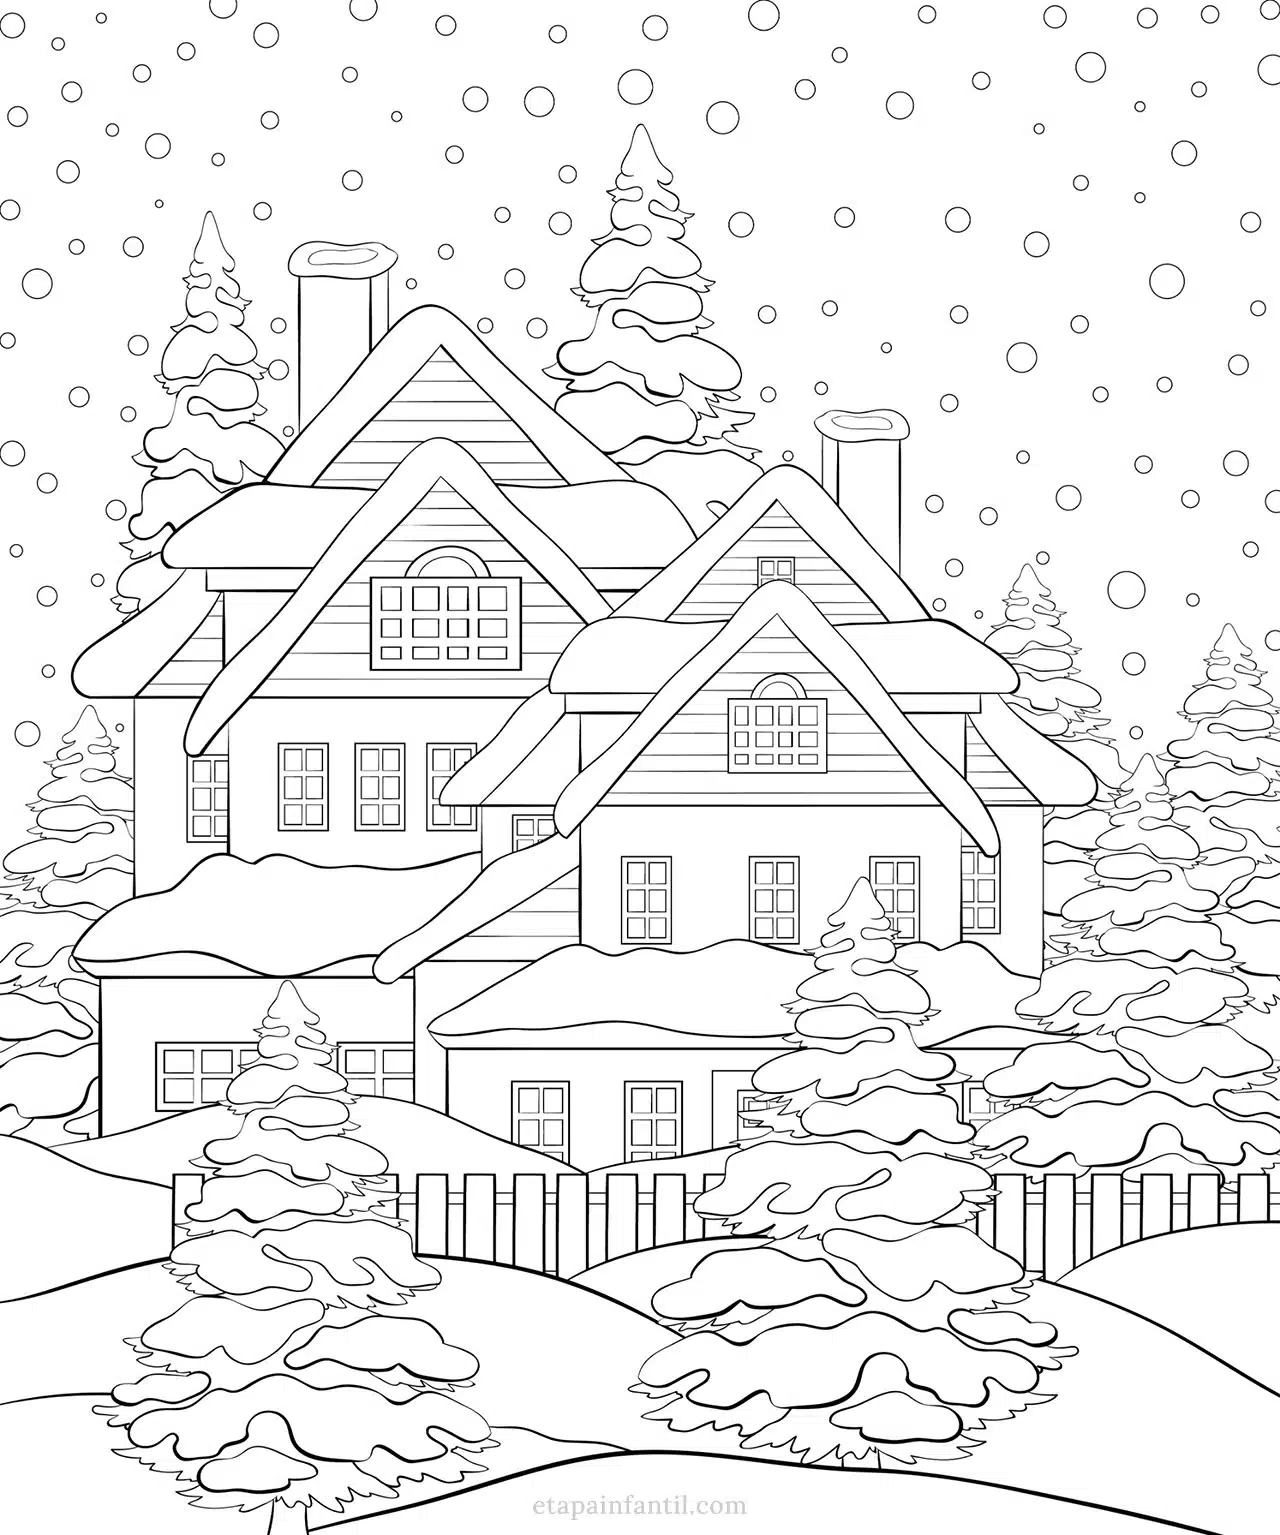 Dibujo de casa en paisaje invernal